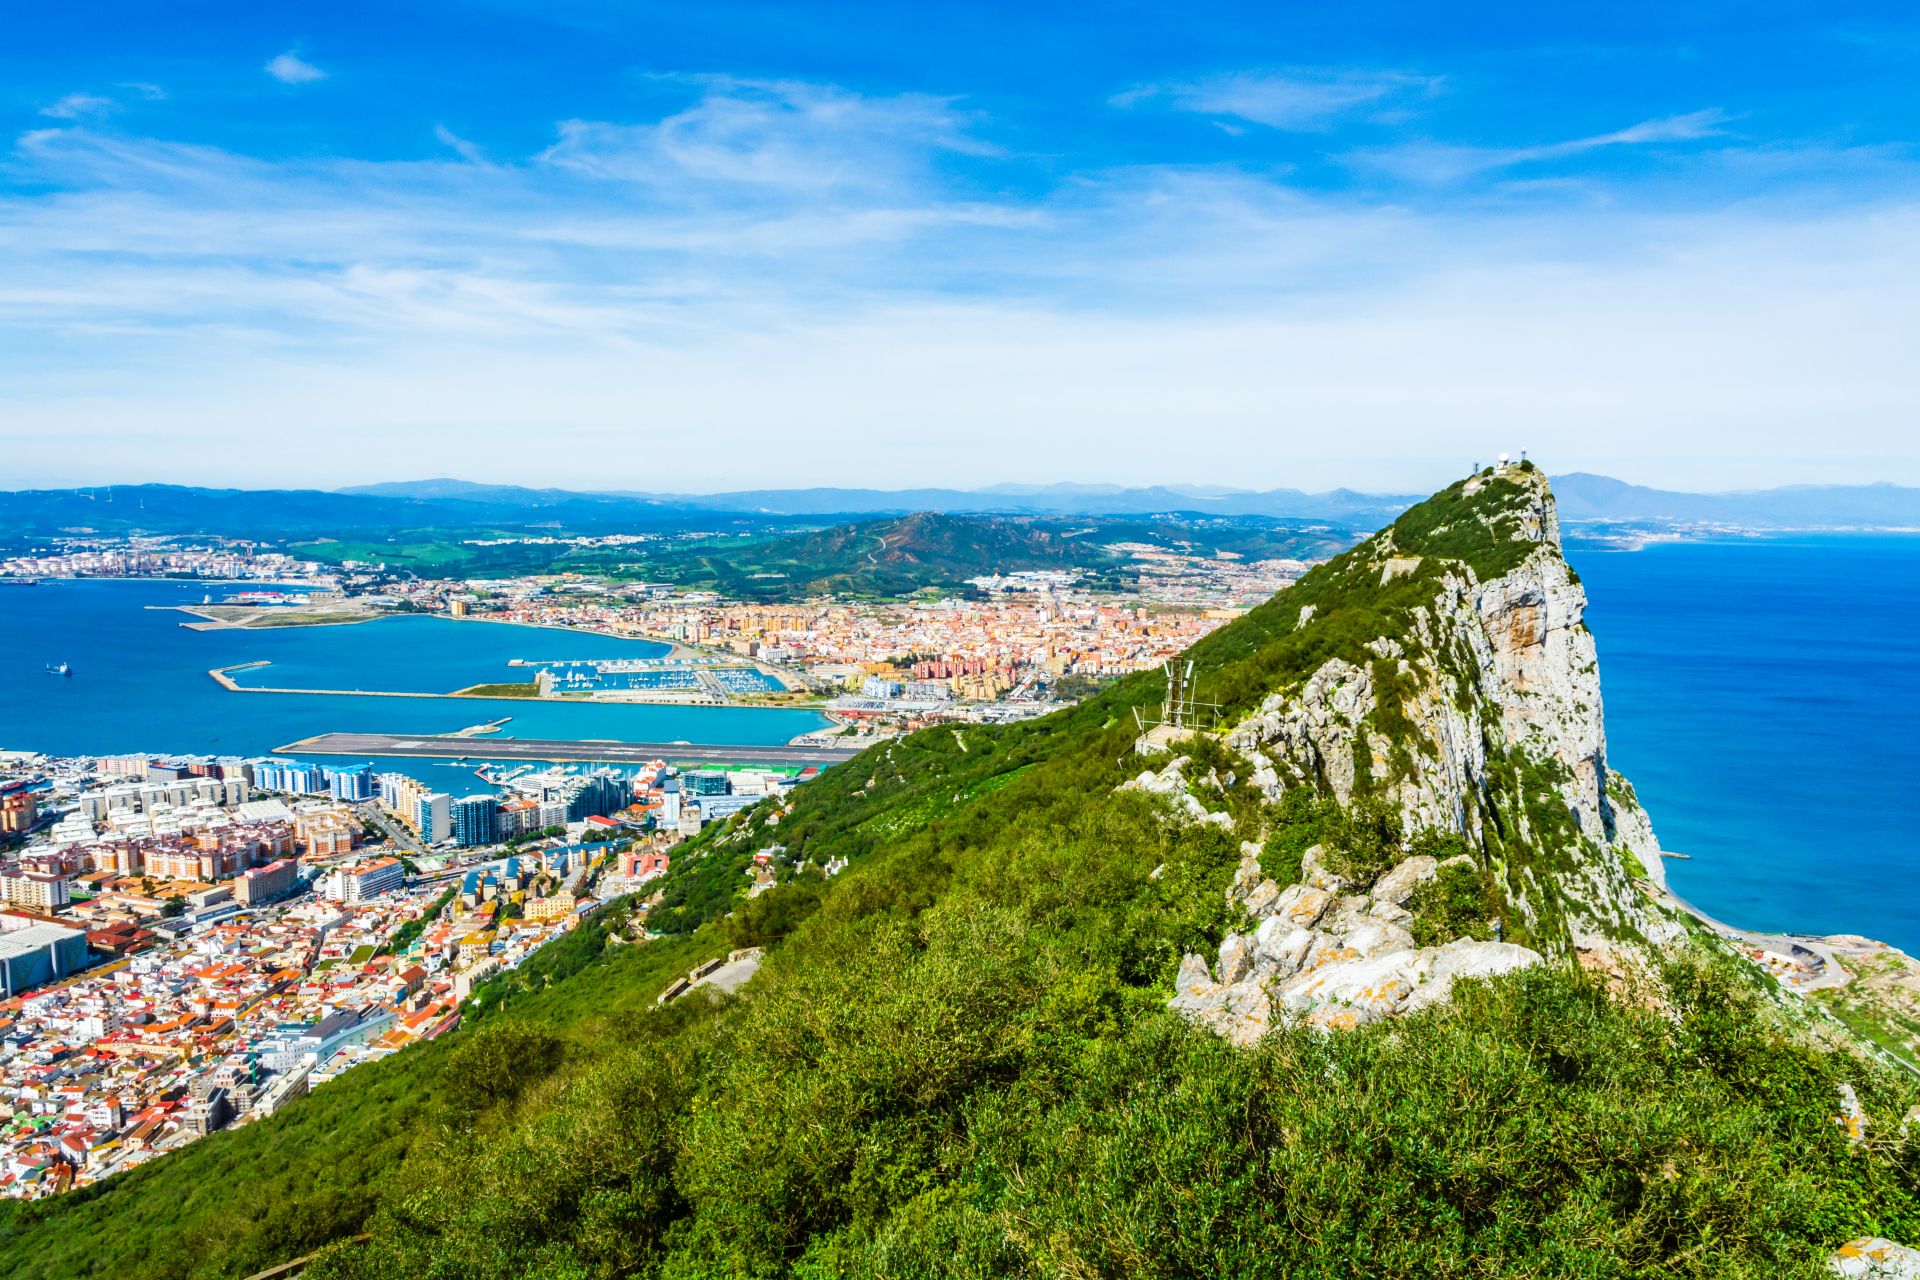 Gibraltar, UK: The tip of the Rock of Gibraltar.